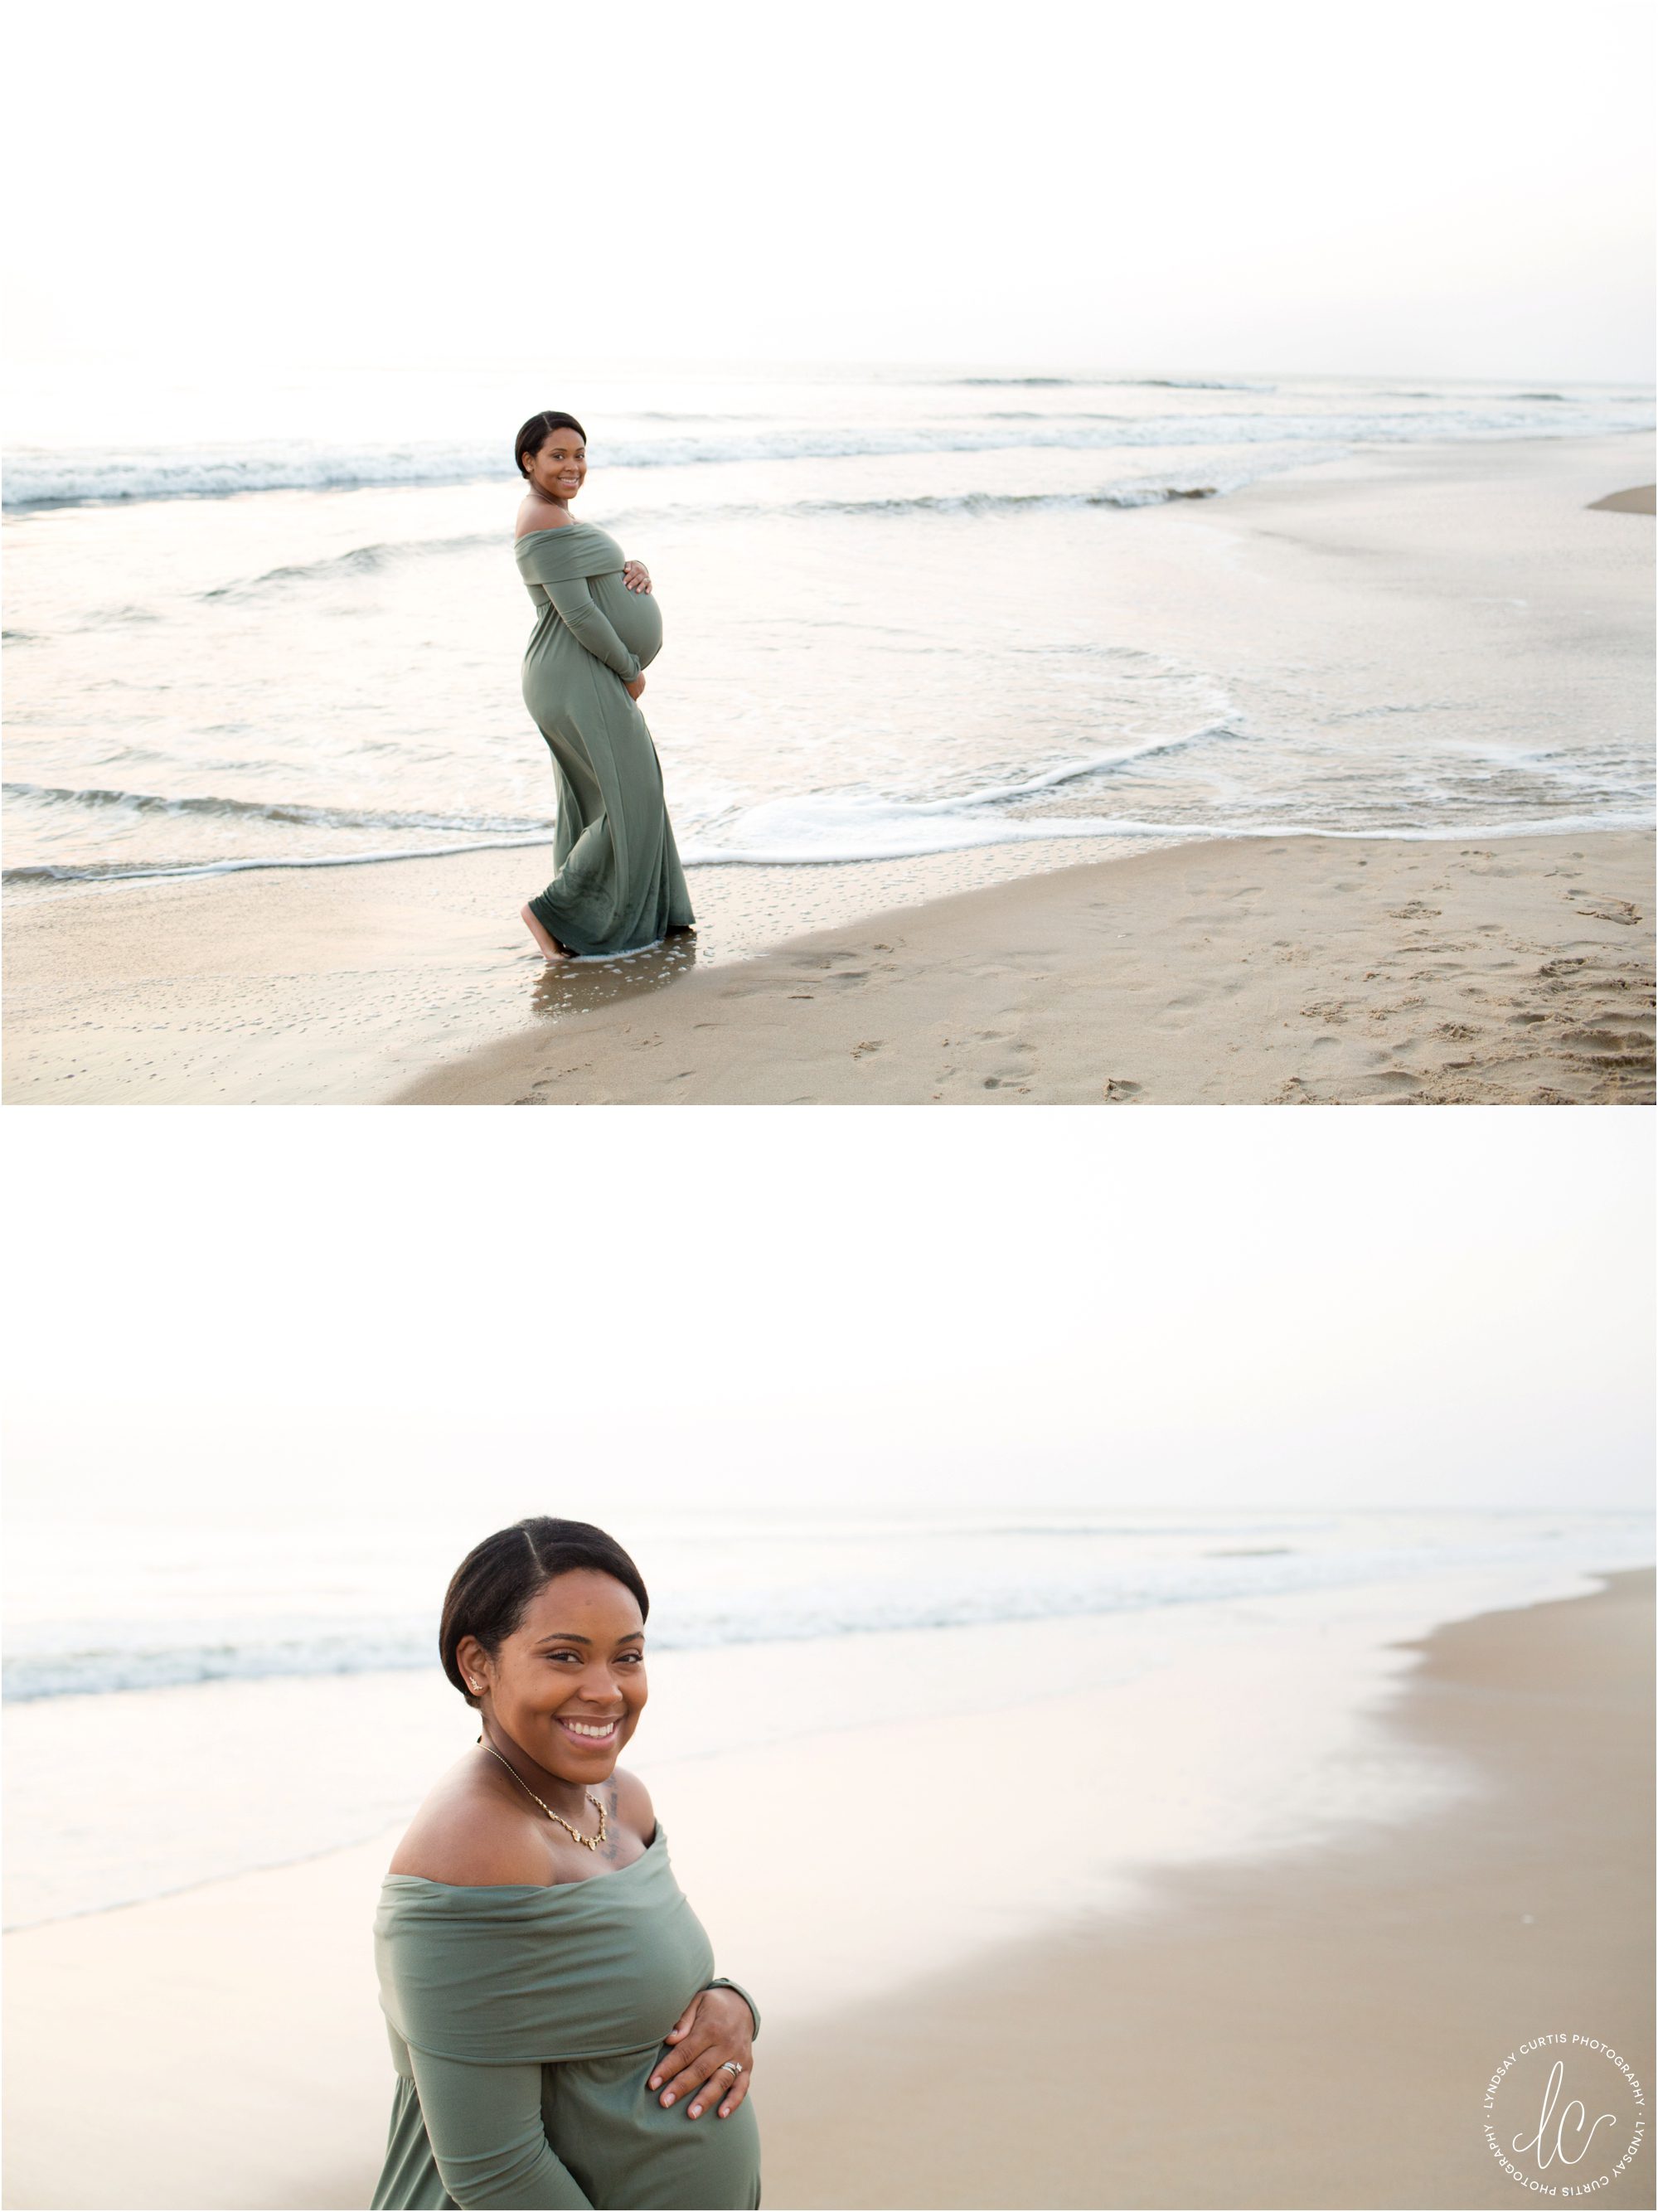 Maternity Portraits on beach. Lyndsay Curtis Photography www.lyndsaycurtis.com